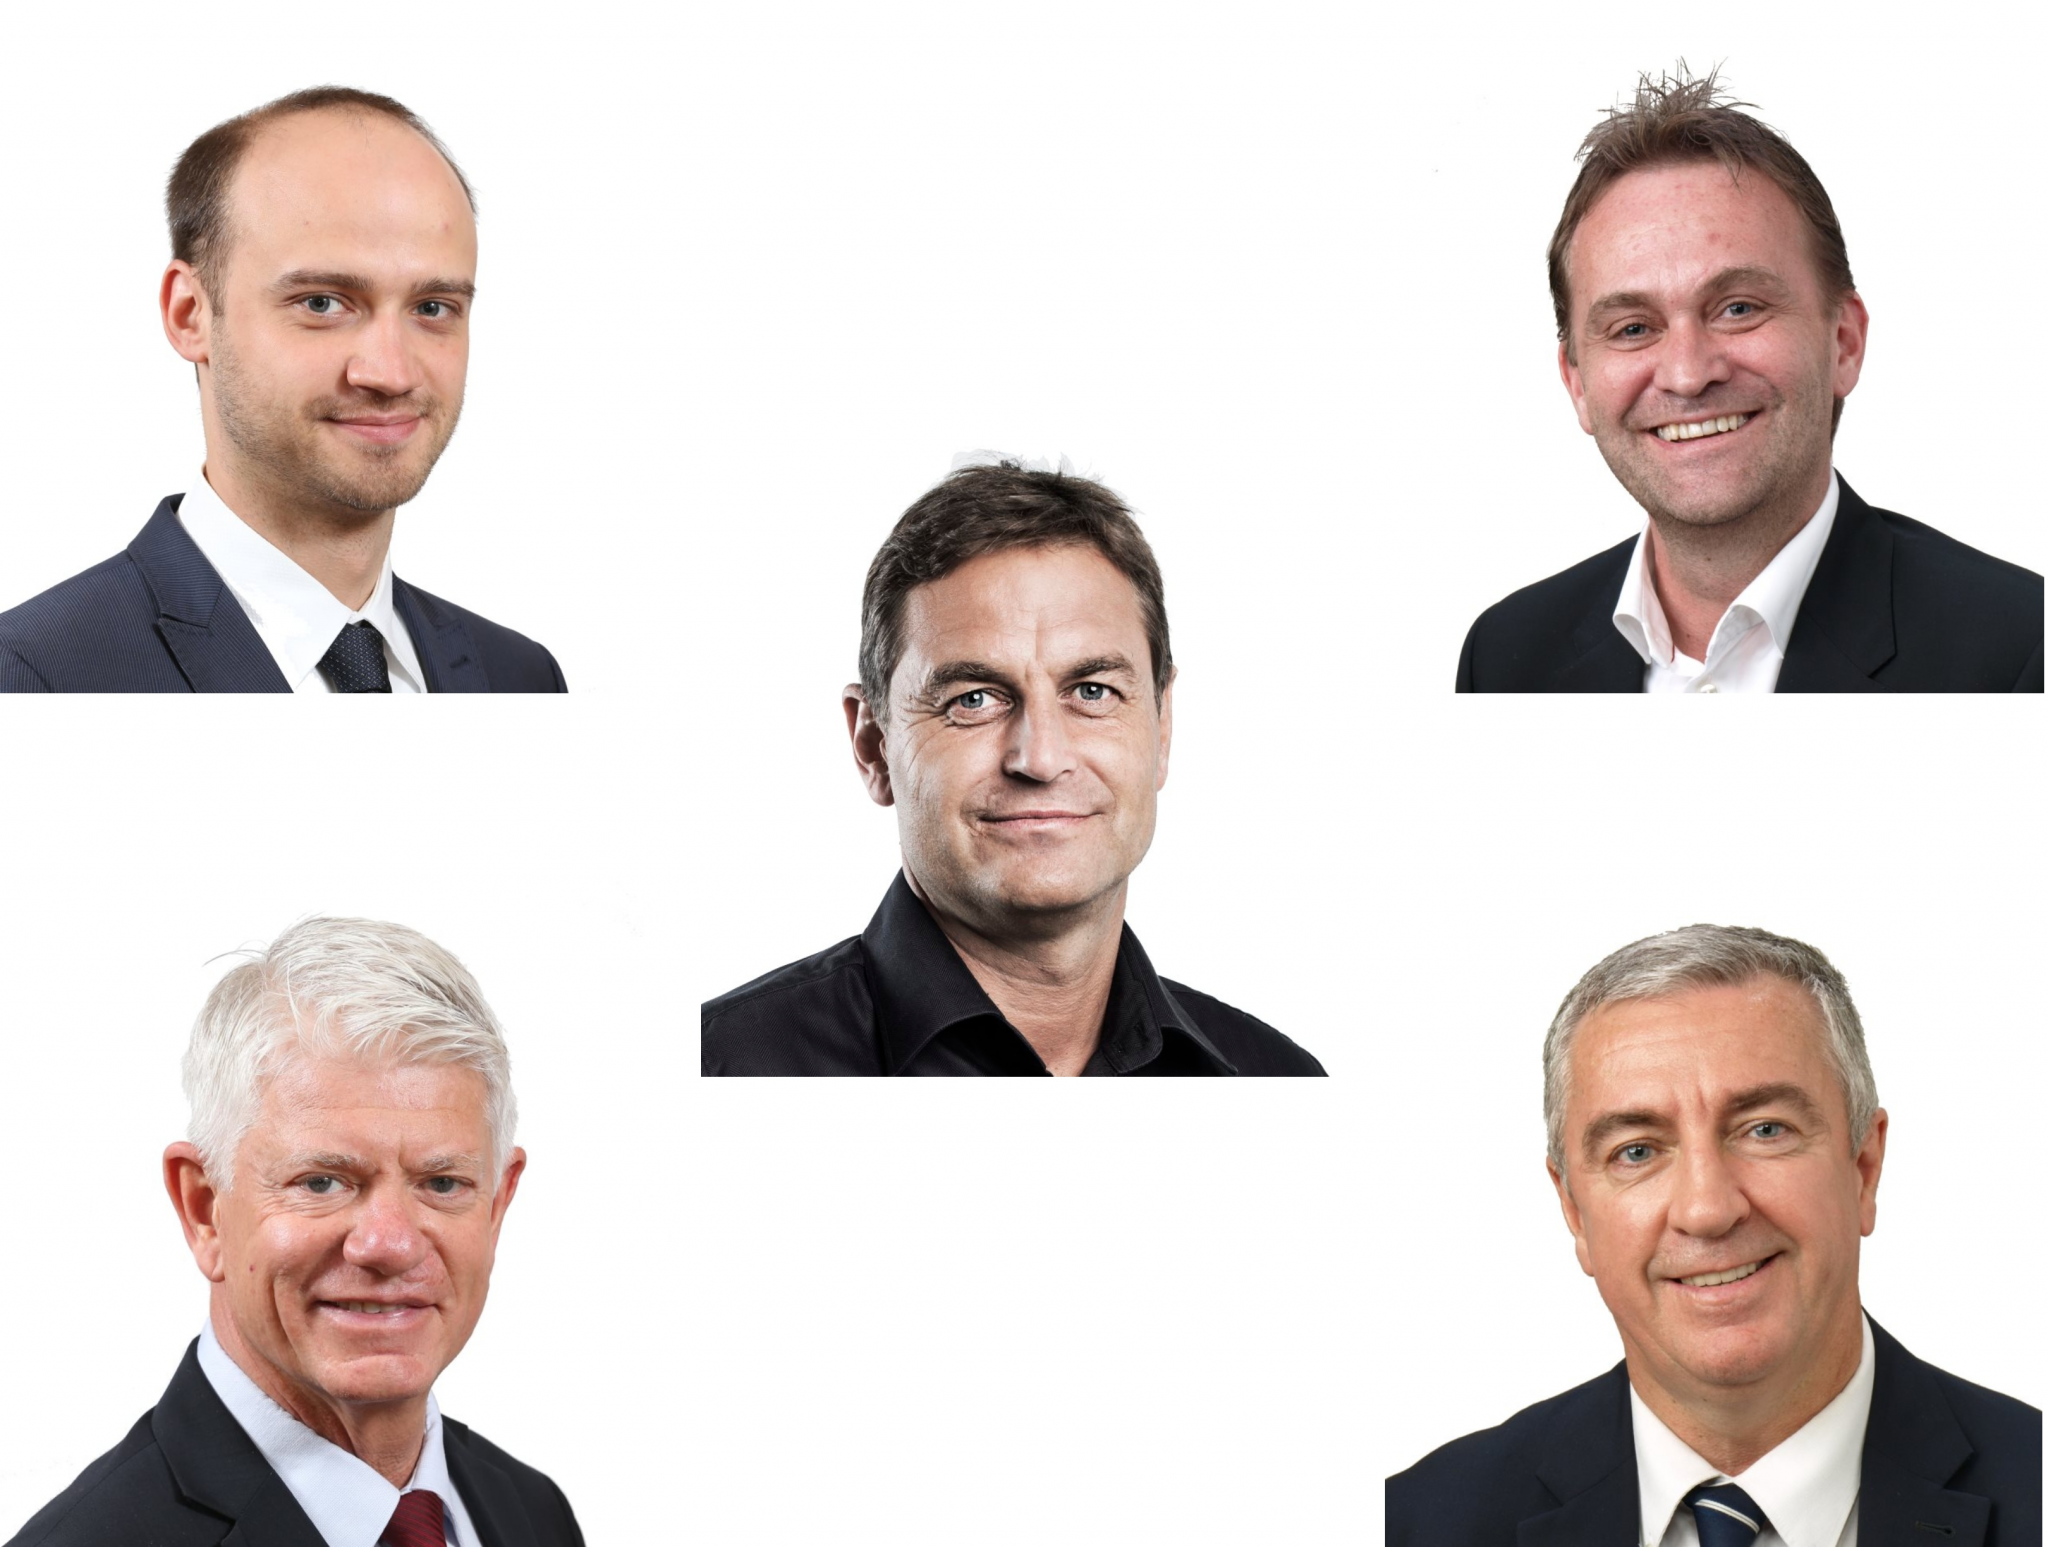 Five candidates seeking to succeed Fasel as IIHF President